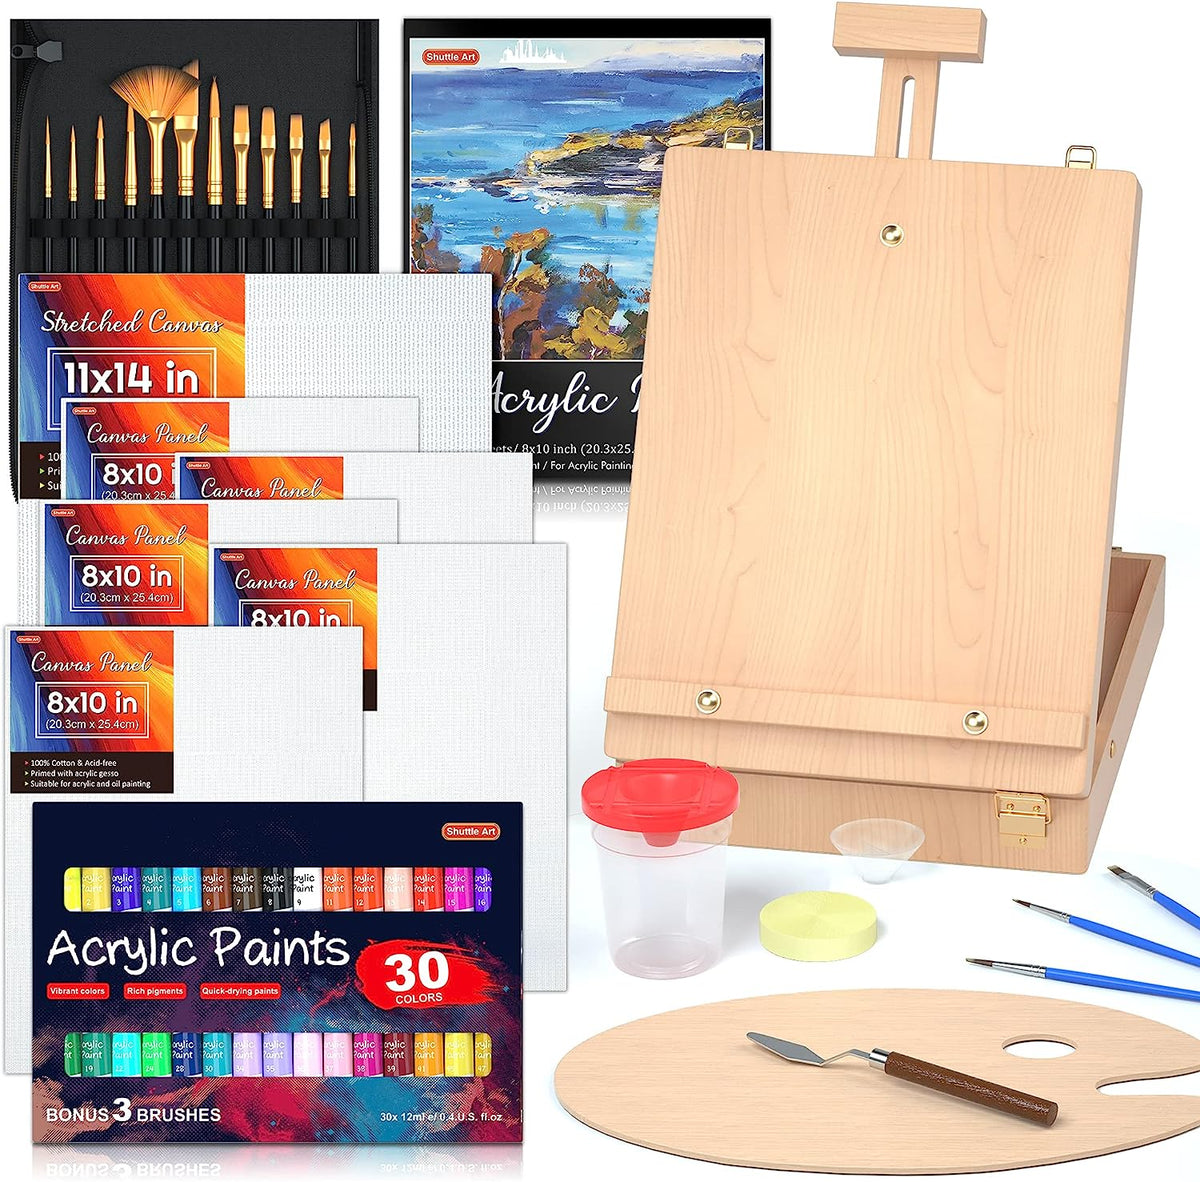 Shuttle Art 48 Pack Acrylic Paint Set, 30 Colors Acrylic Paint (36ml) with  10 Brushes 5 Canvas 1 Paint Knife 1 Palette 1 Art Sponge, Complete Set for